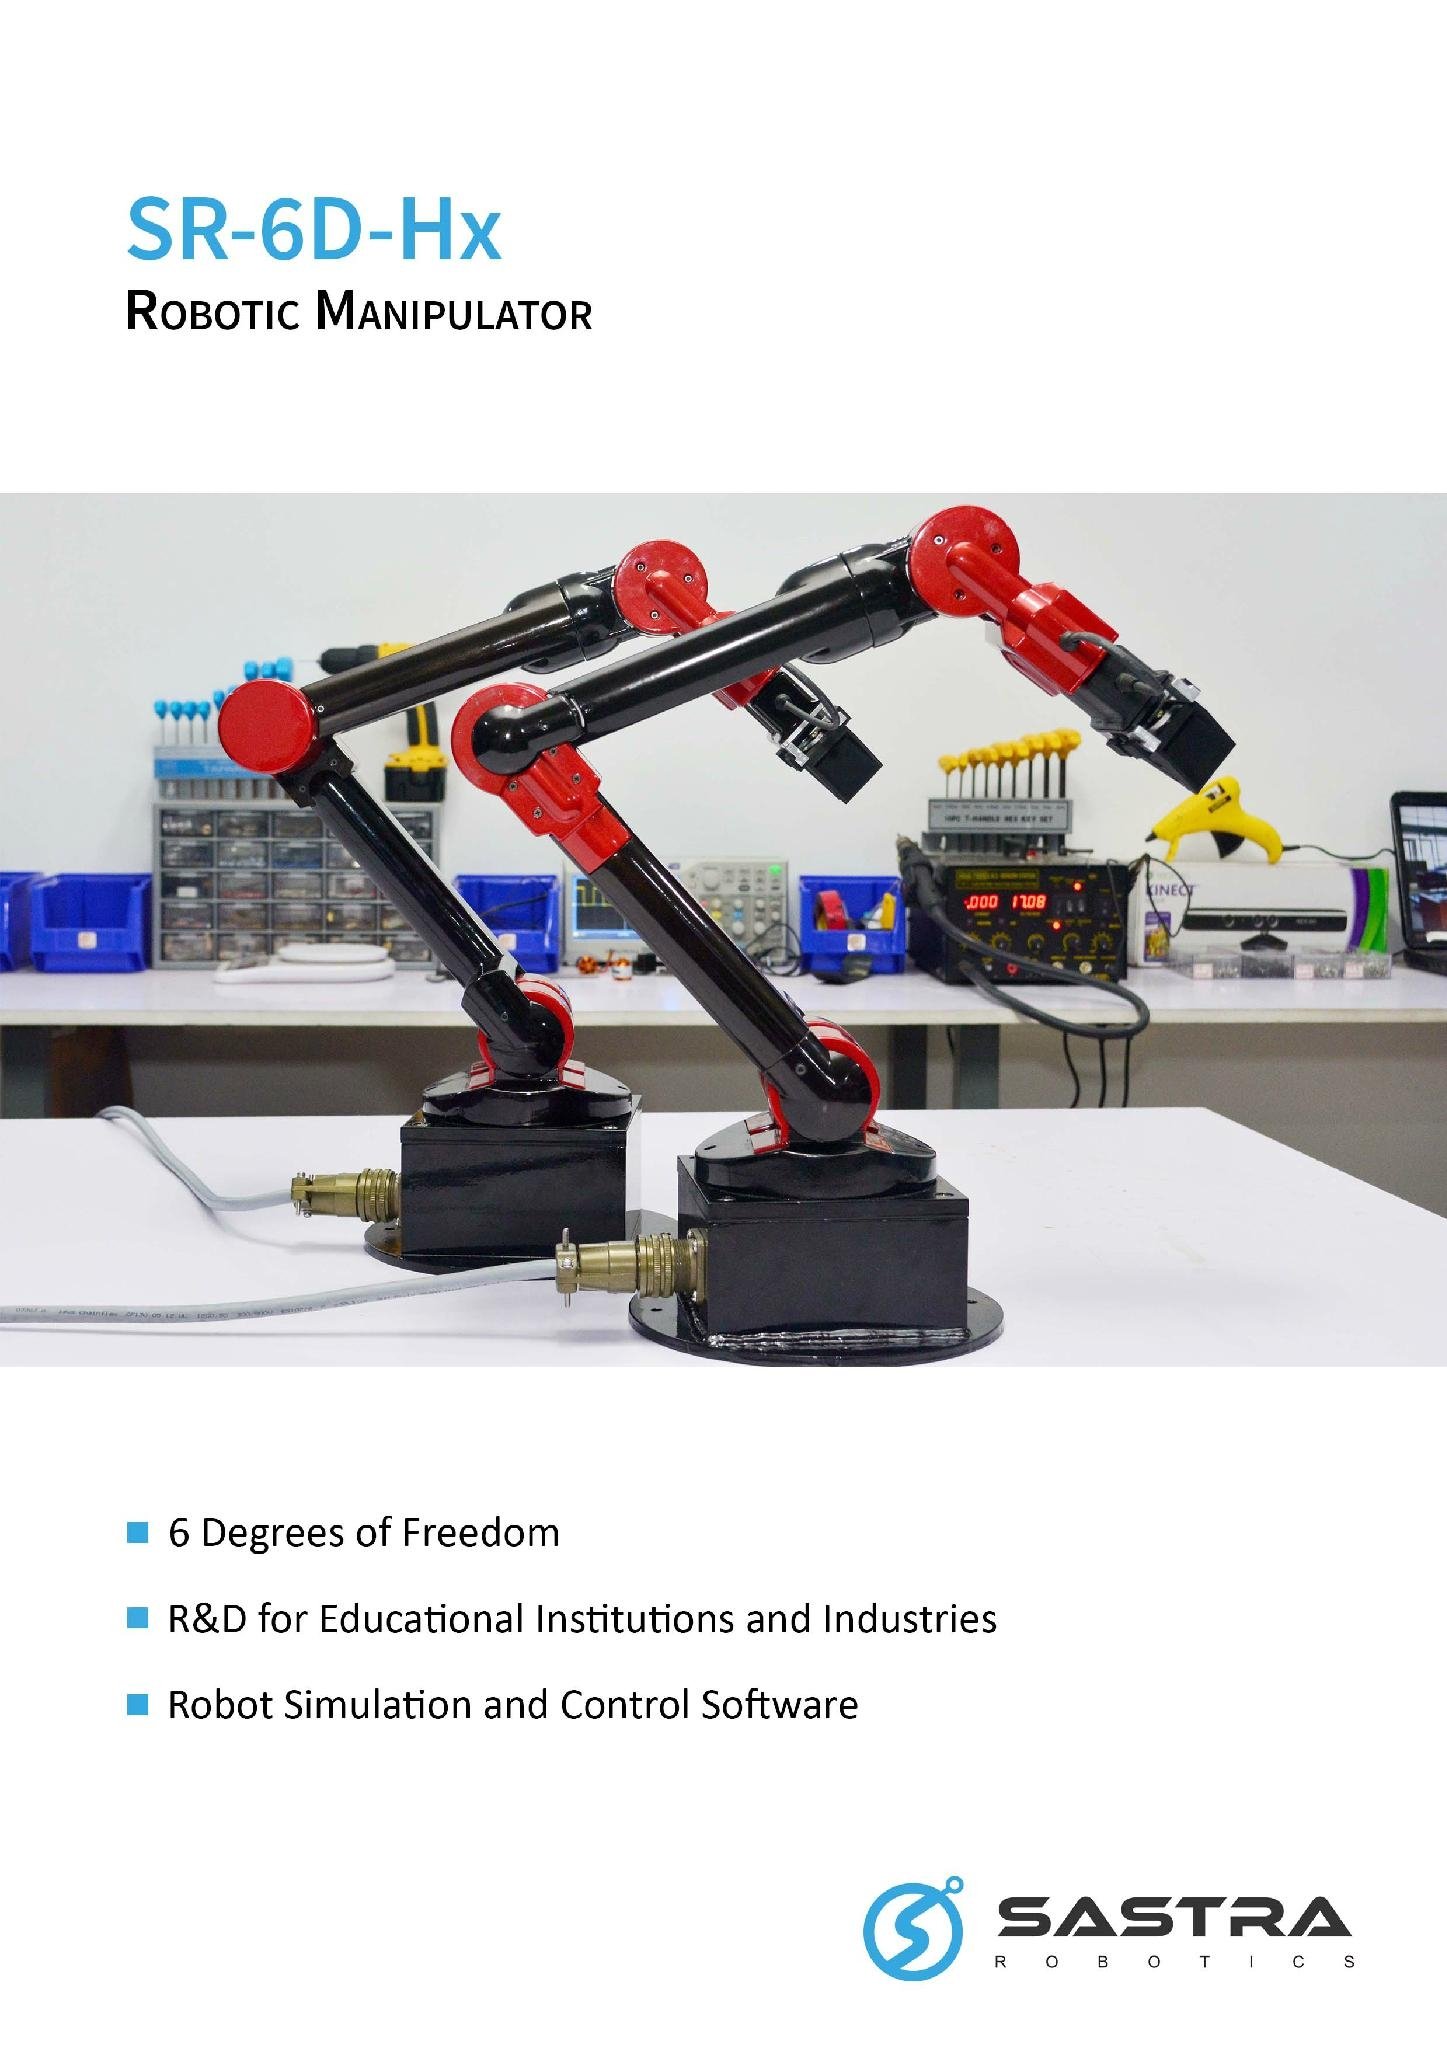 SR-6D-Hx Articulated Robot Arm - Sastra Robotics (India Manufacturer) -  Other Industrial Supplies - Industrial Supplies Products - DIYTrade